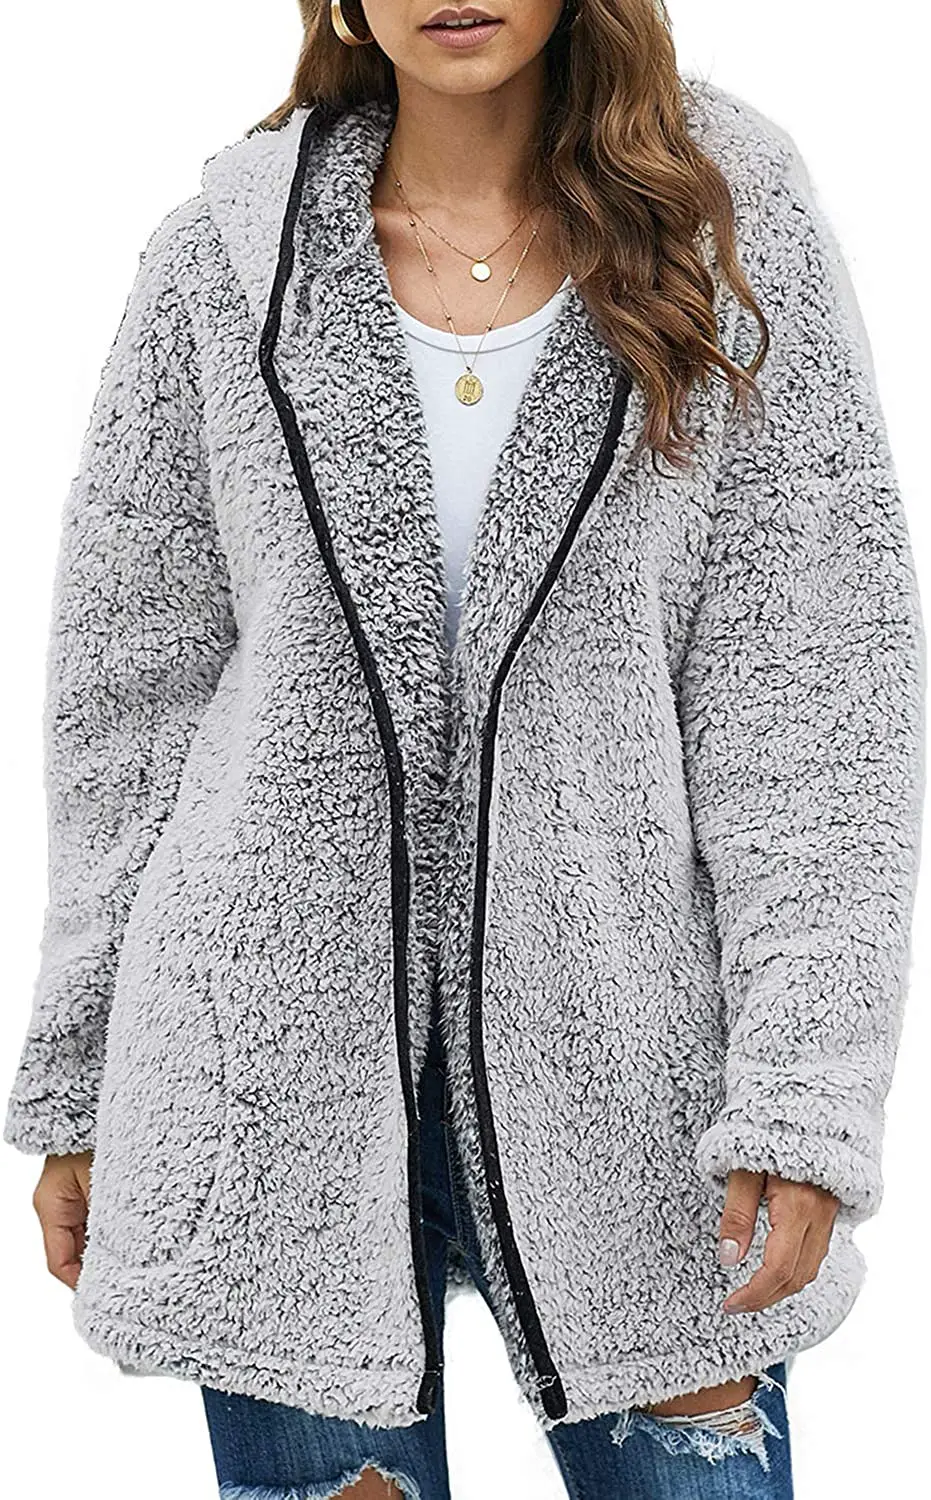 Plus Size Fleece Sweater 01